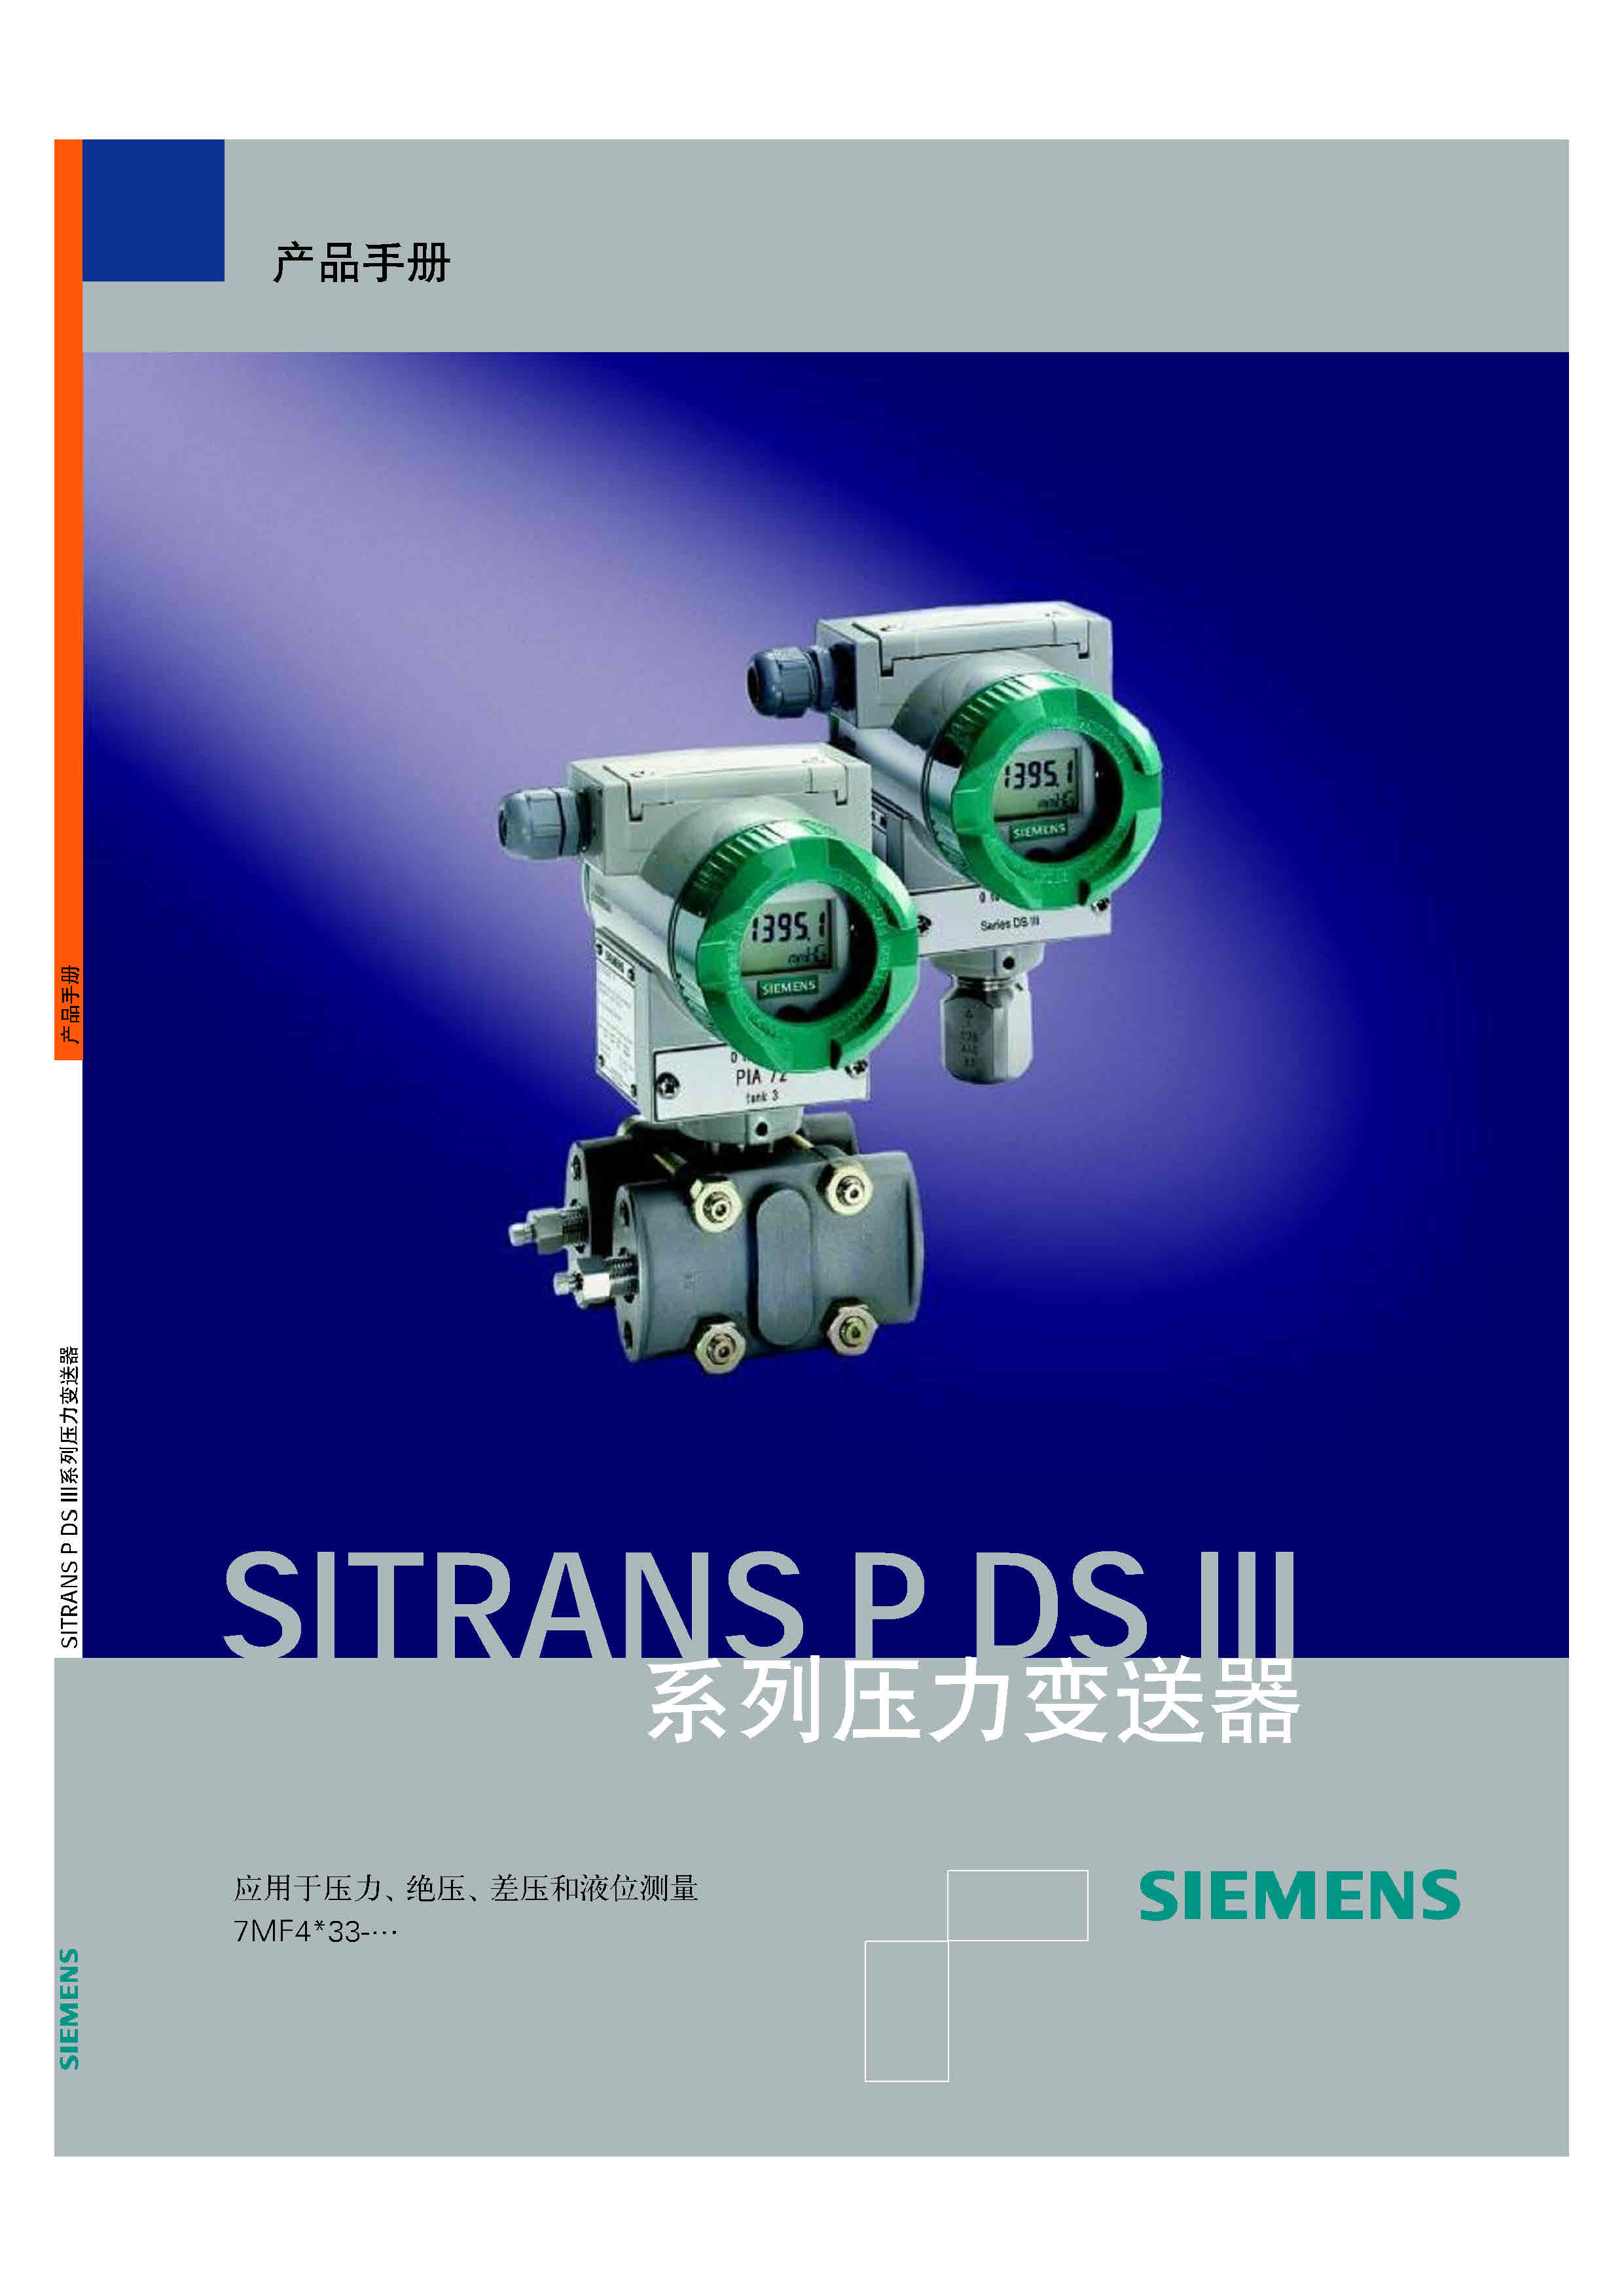 SITRANS-P-DS-III智能型压力变送器